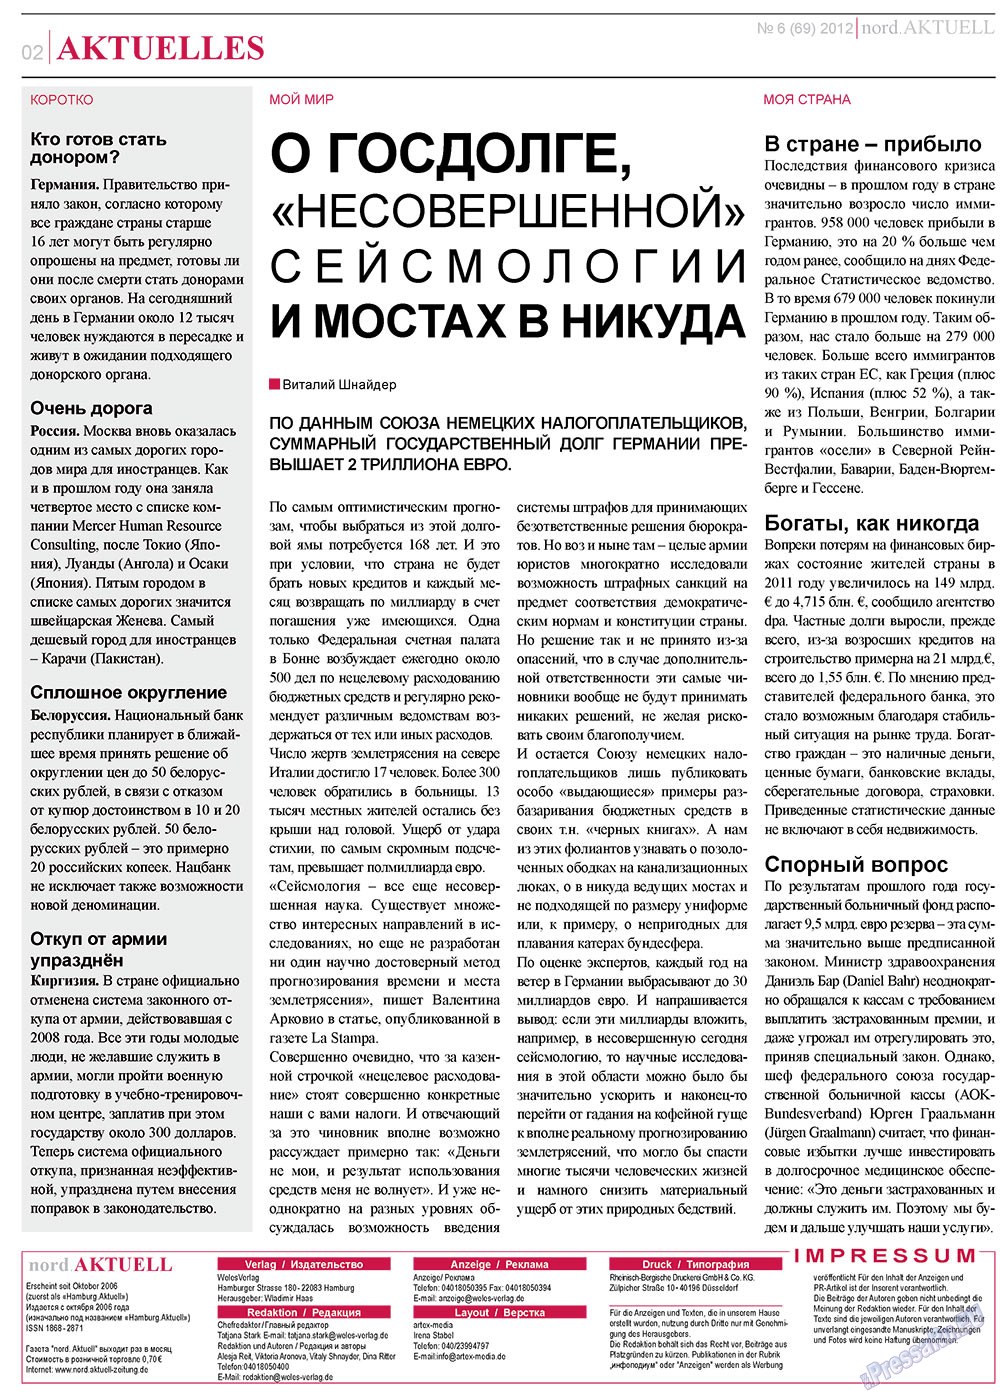 nord.Aktuell, газета. 2012 №6 стр.2